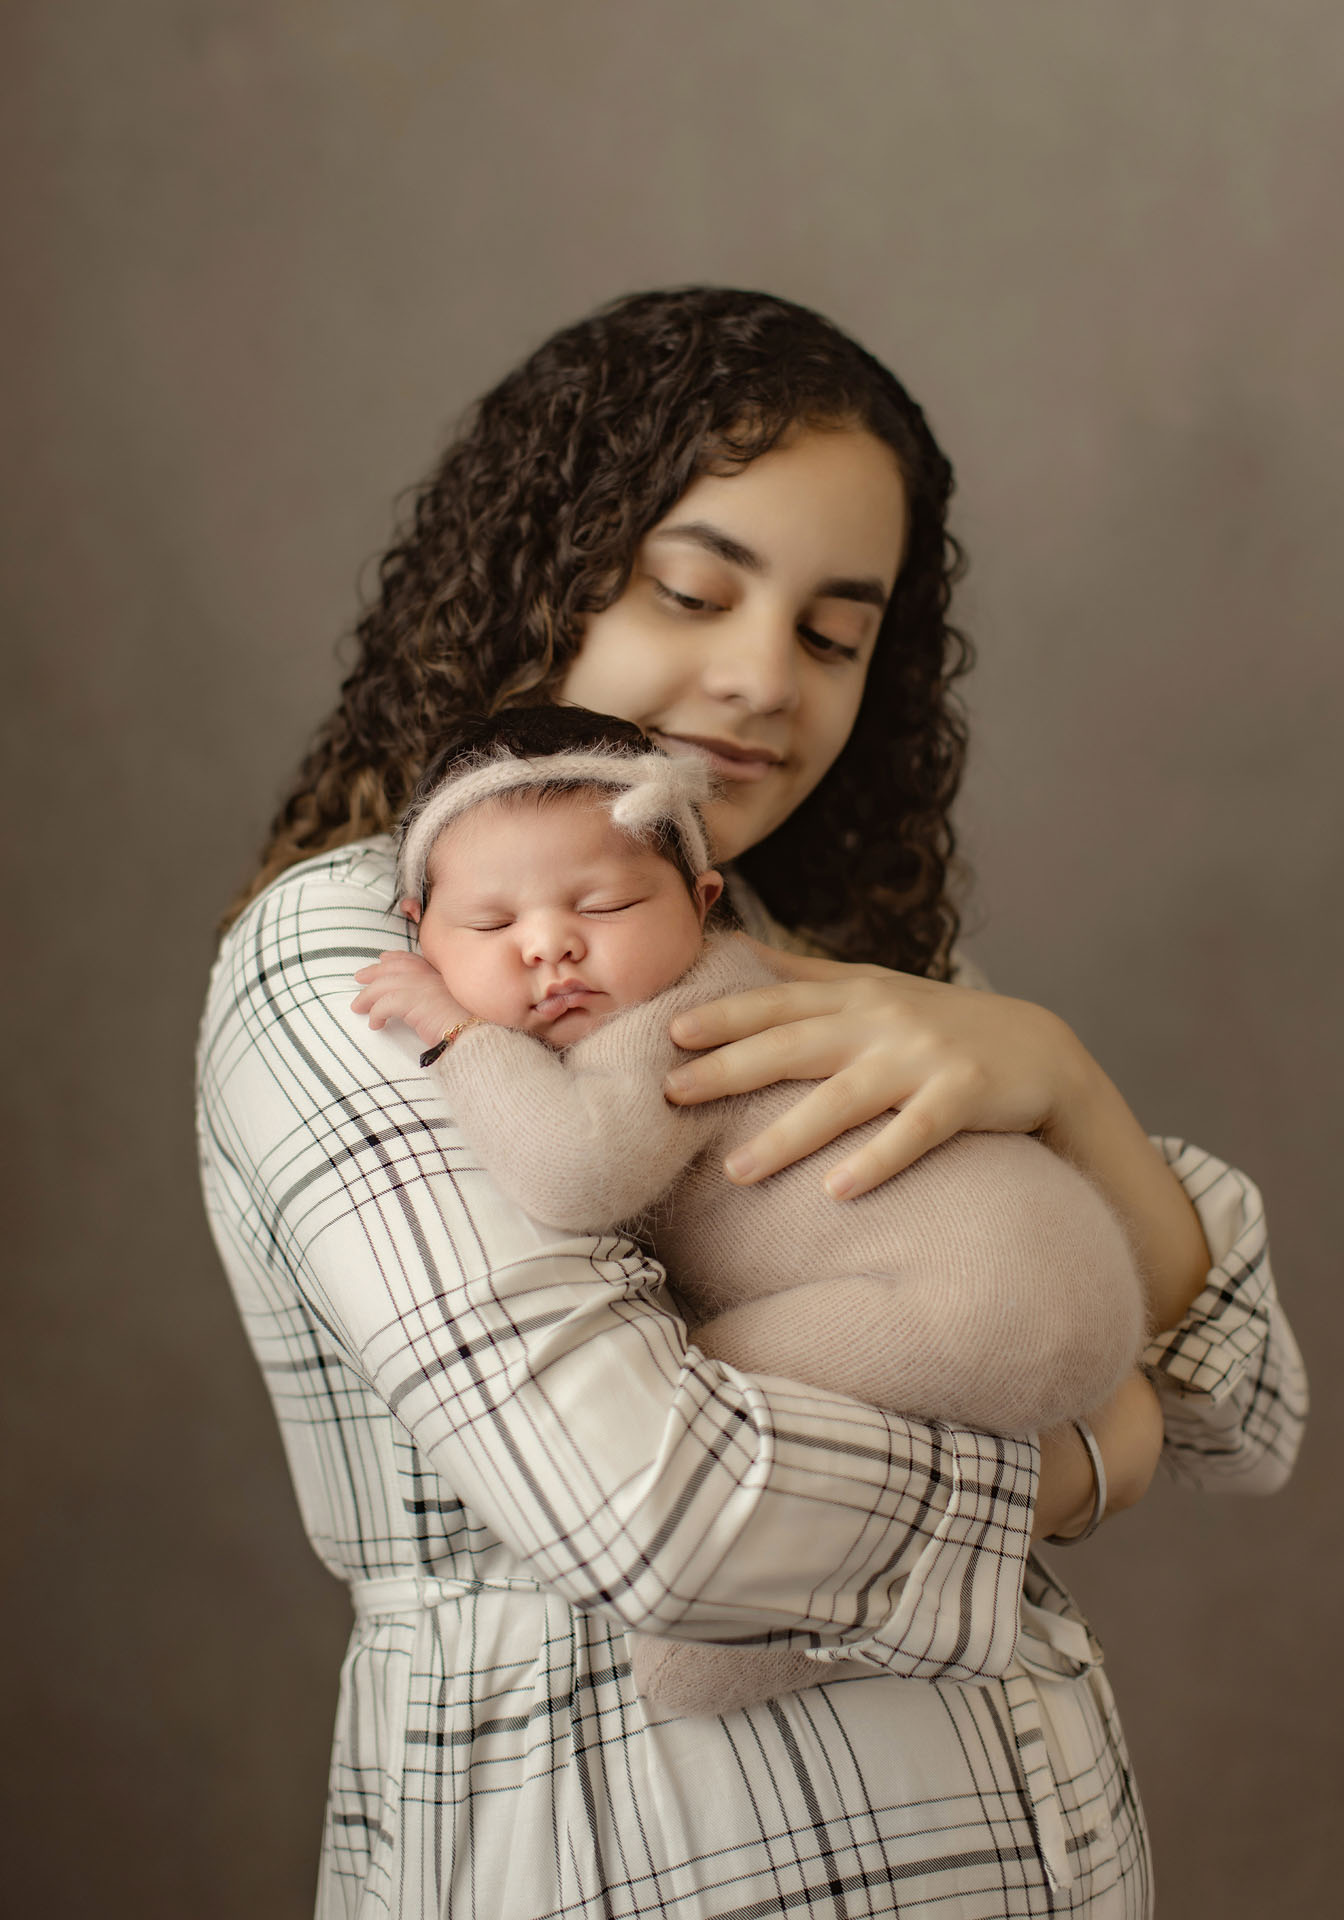 Mom and newborn baby girl portrait